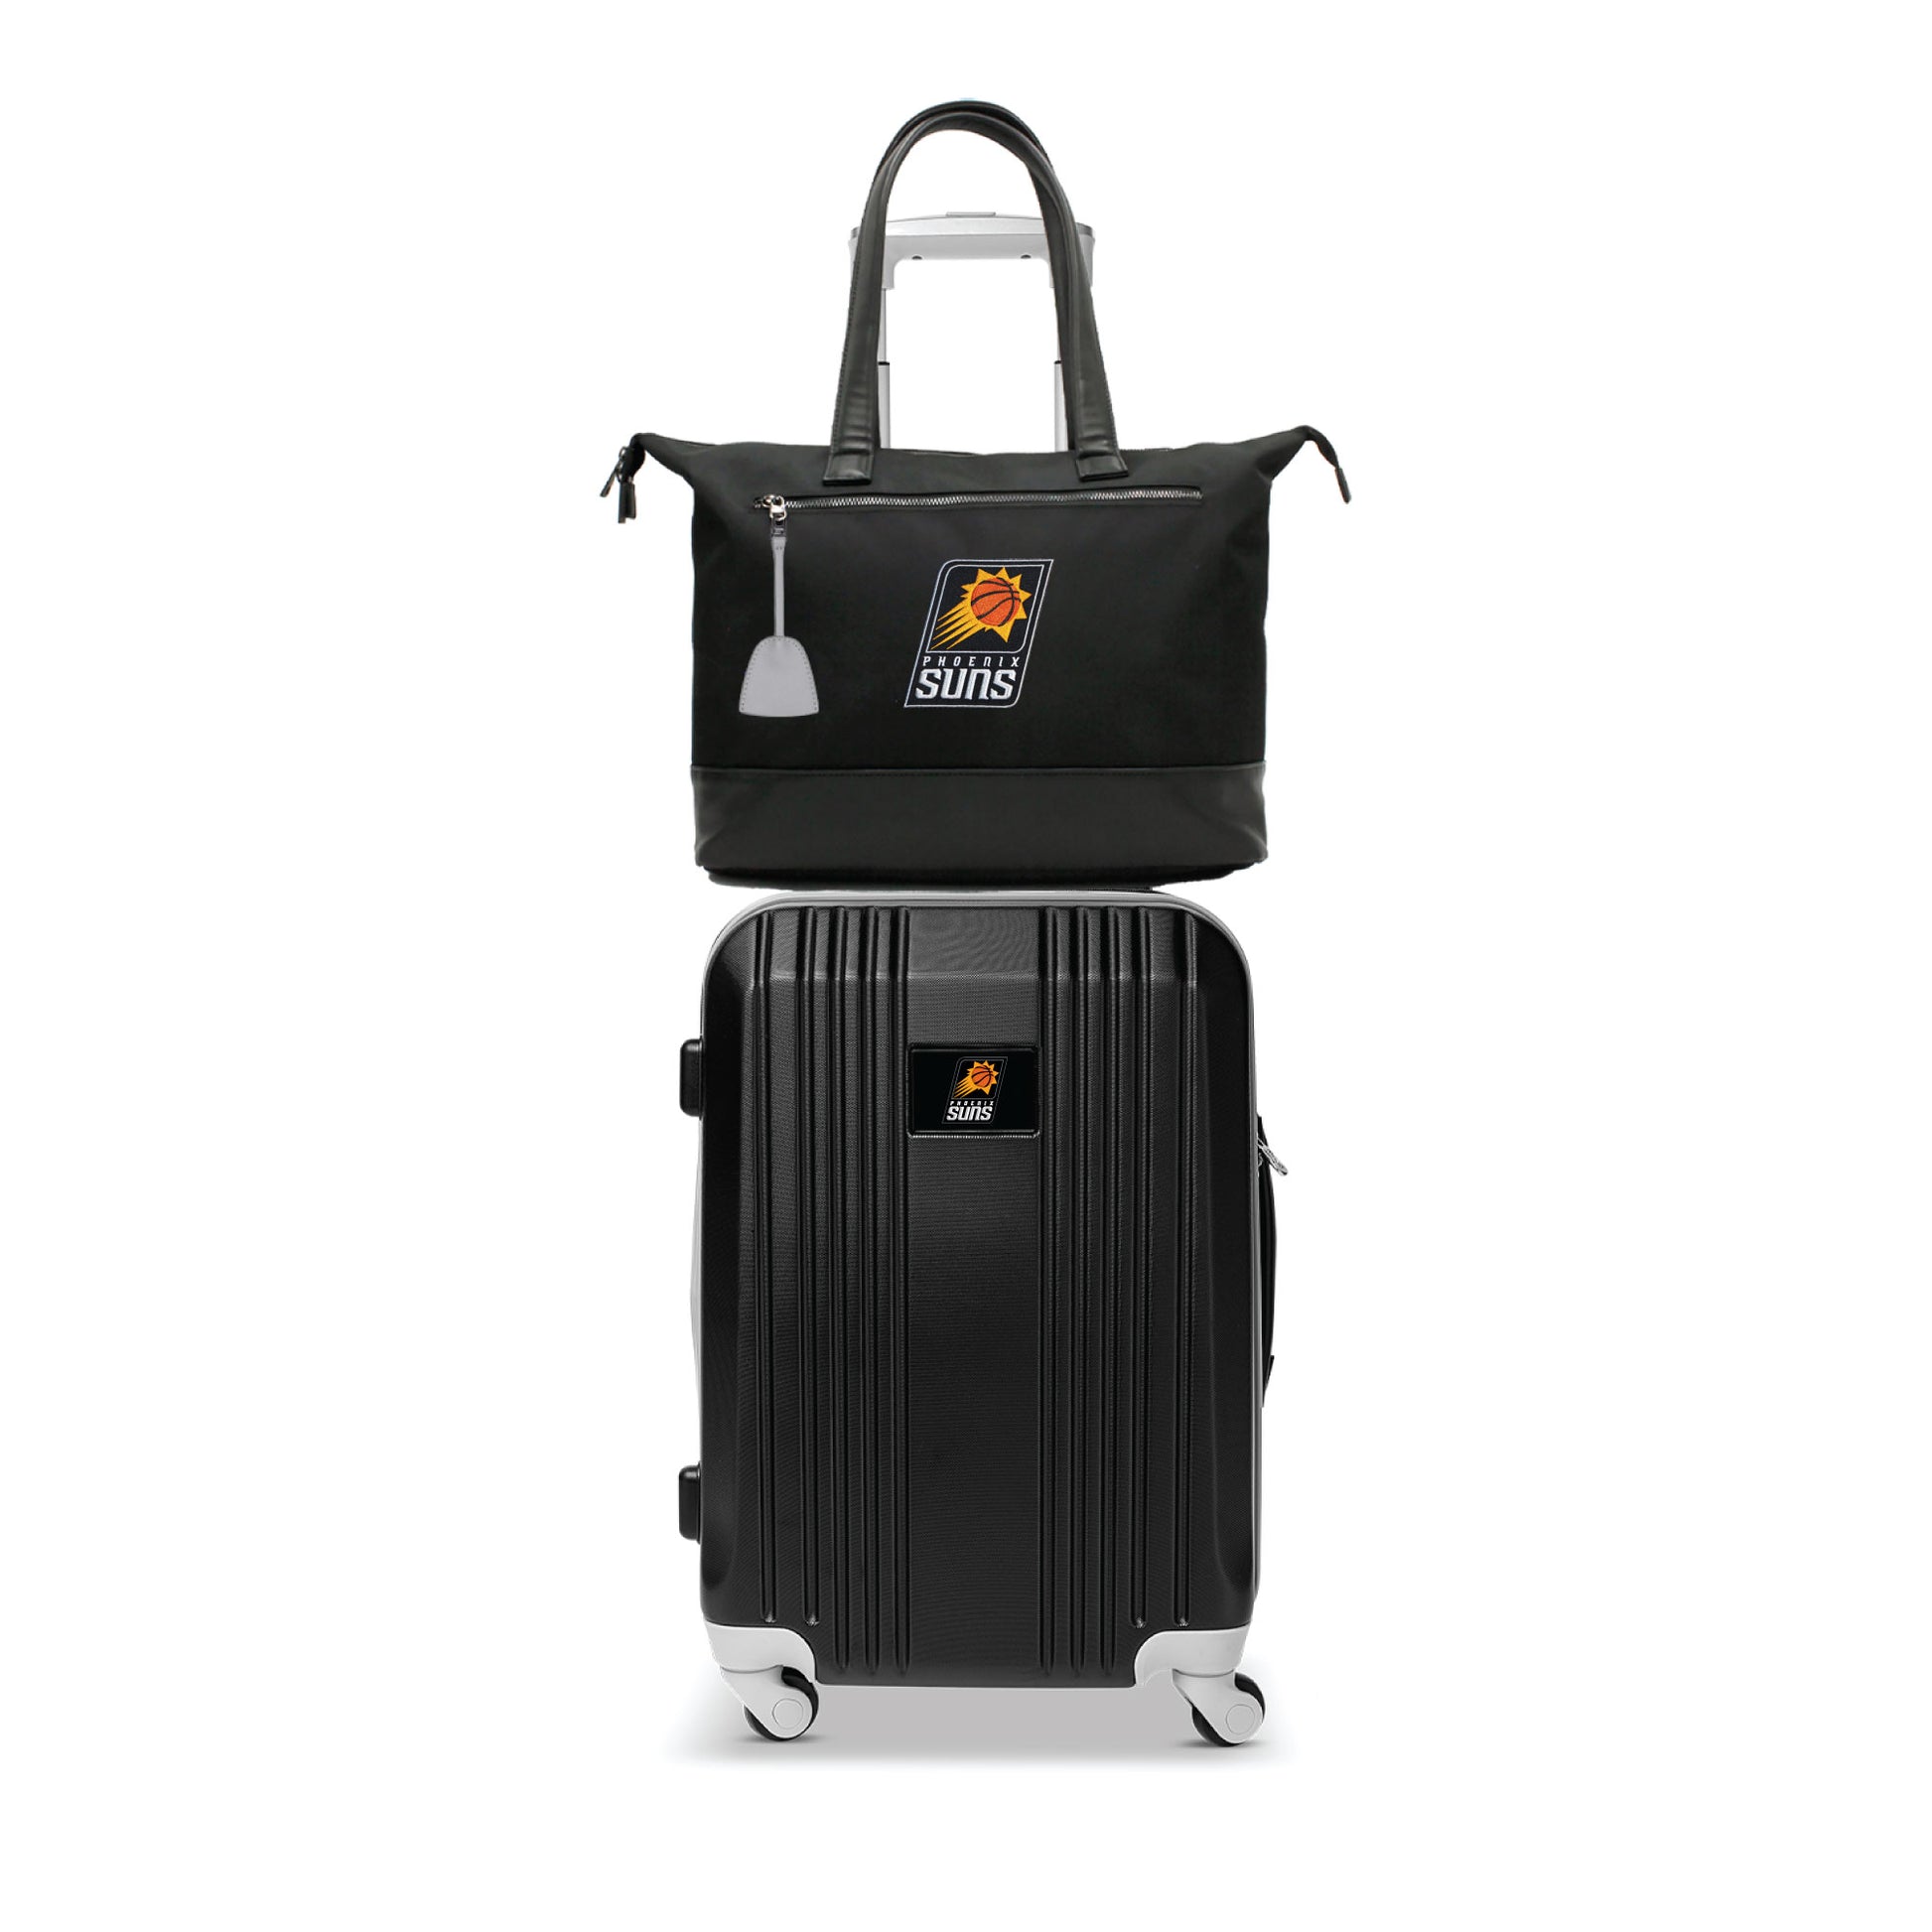 Phoenix Suns Premium Laptop Tote Bag and Luggage Set